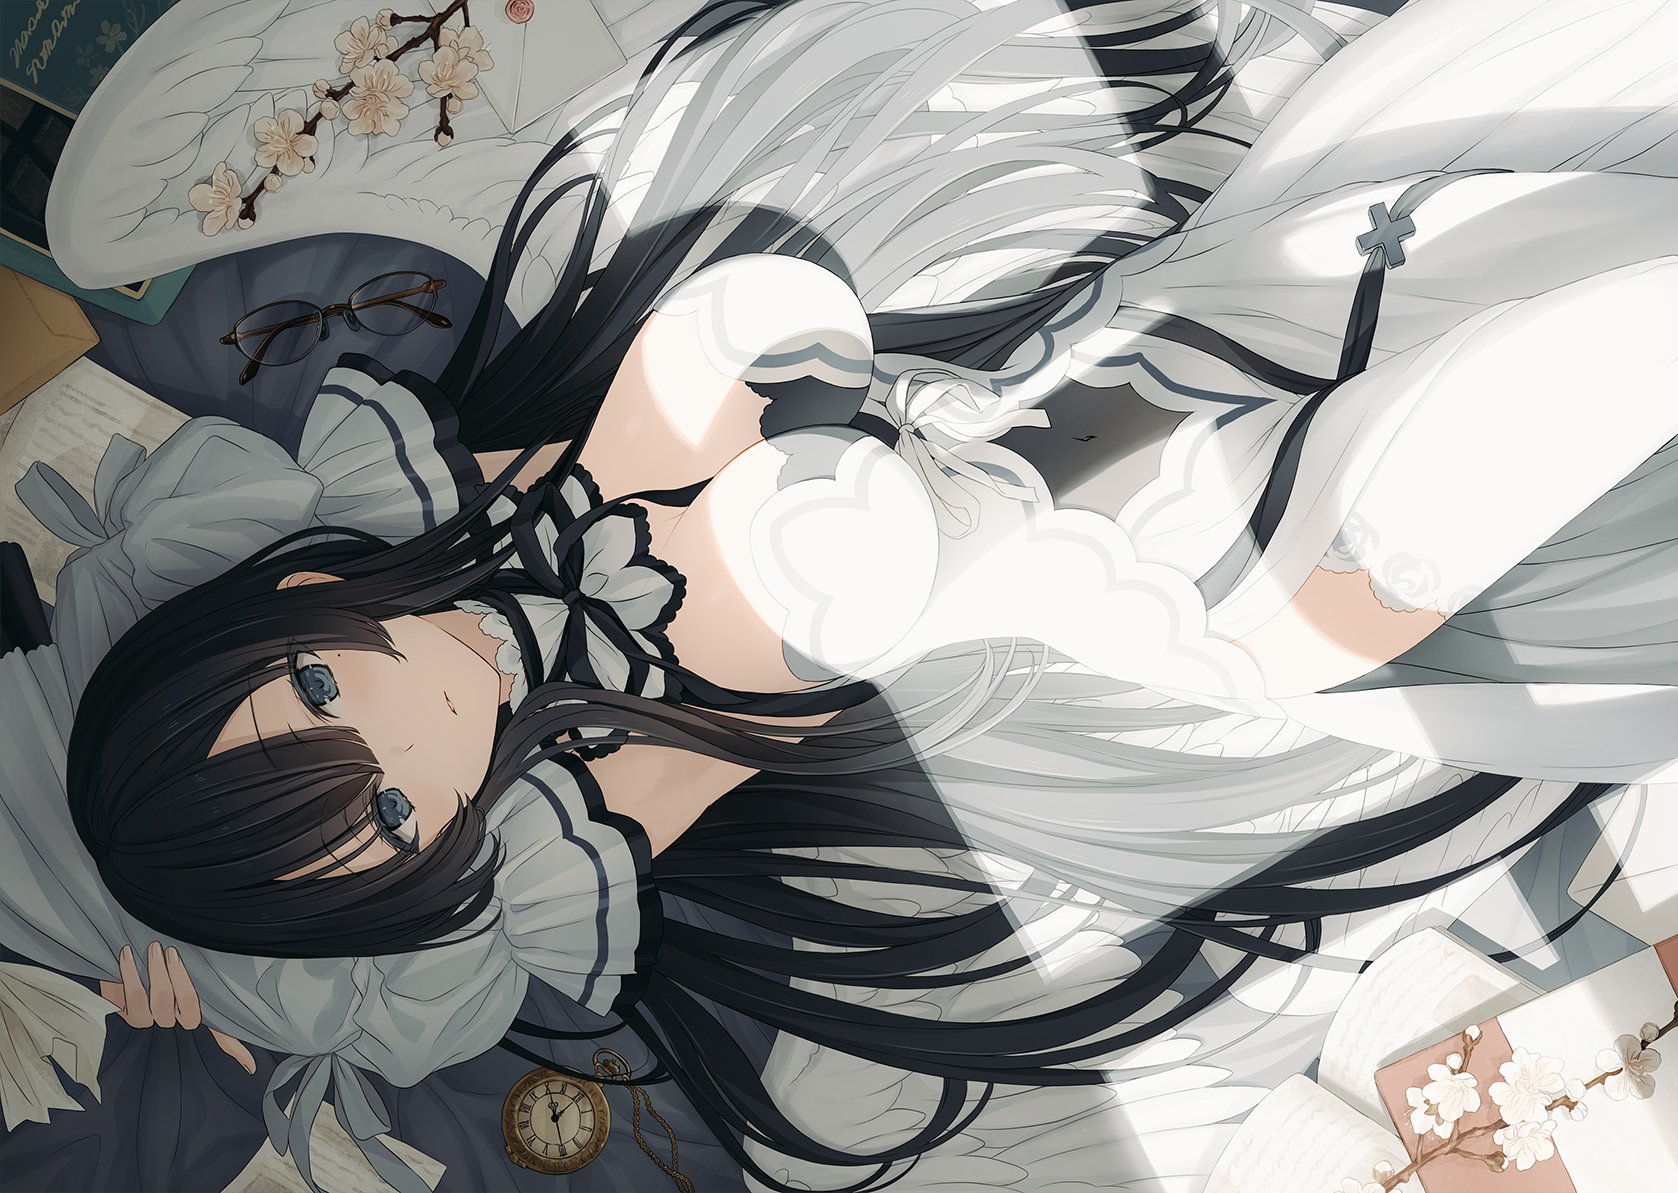 Anime 1678x1193 anime anime girls digital art artwork 2D portrait Yashiro Seika black hair long hair dress big boobs wings